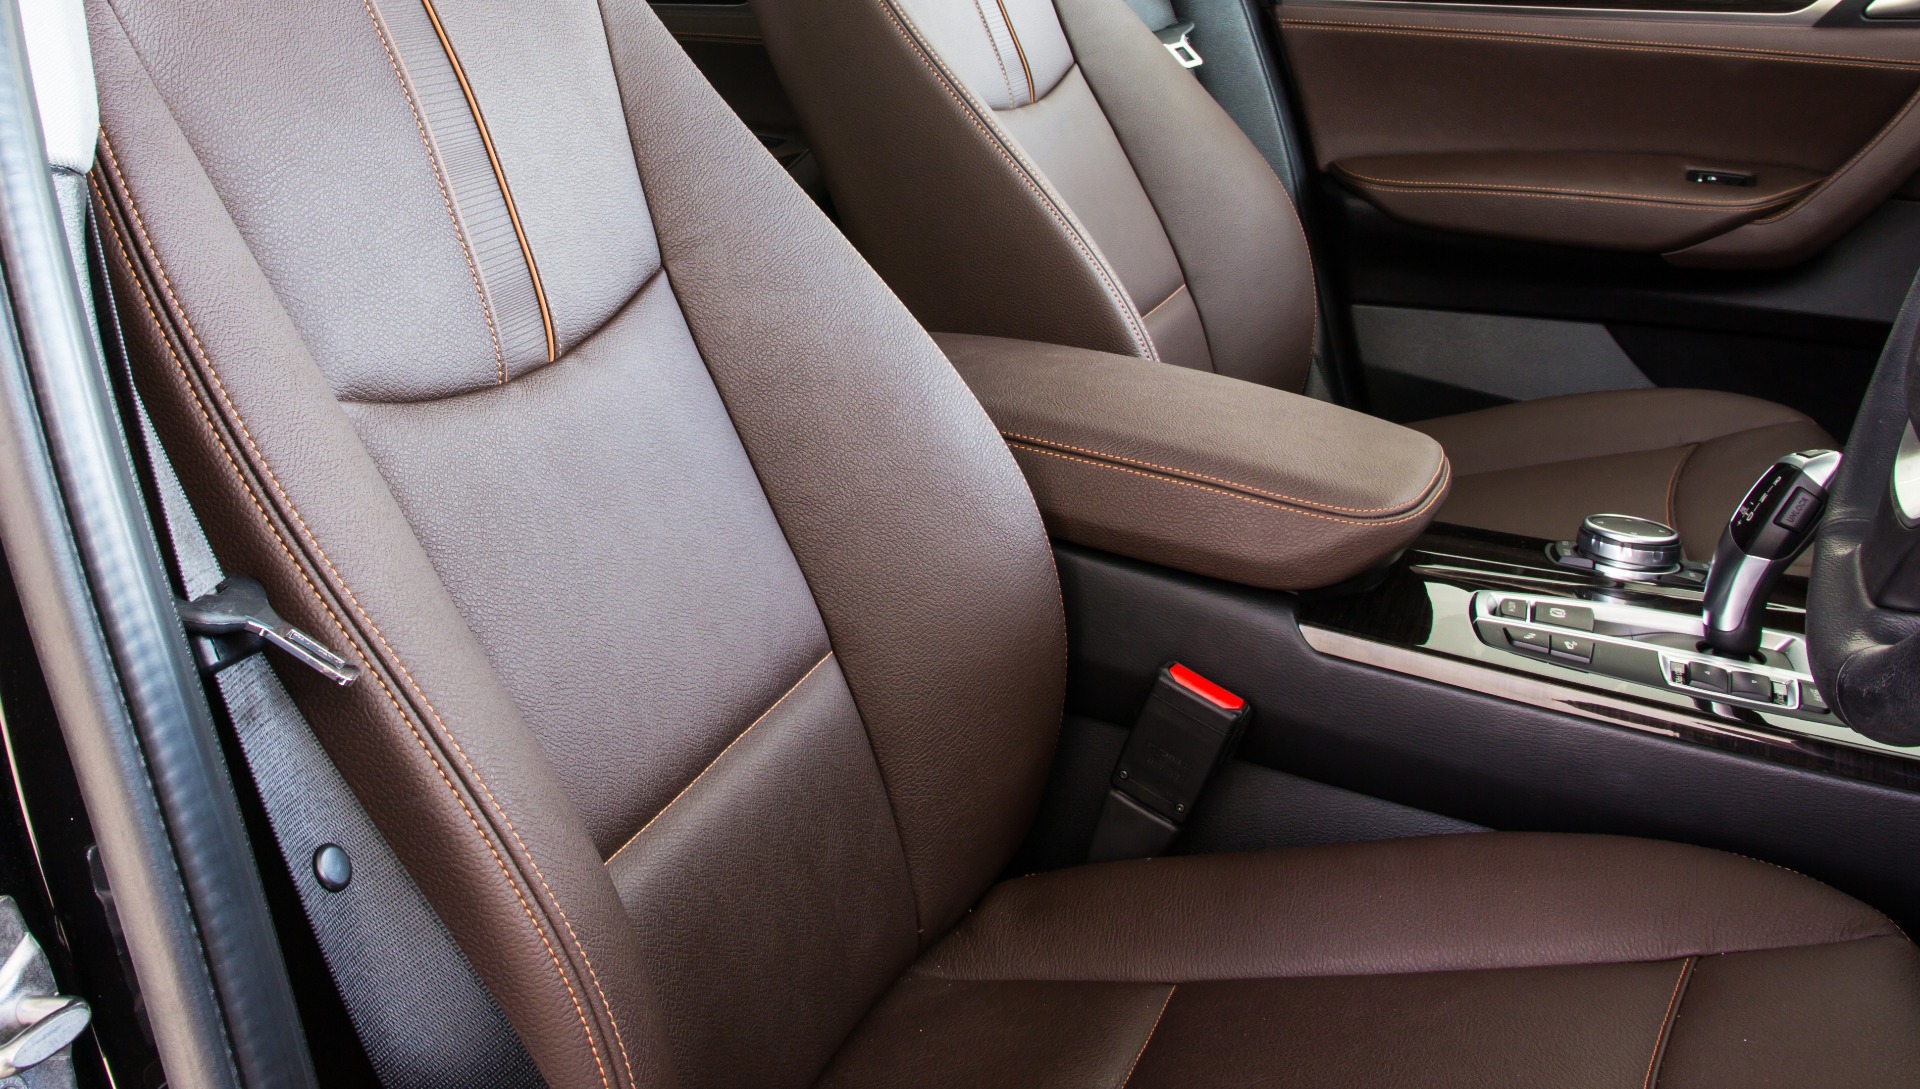 Black leather car seats